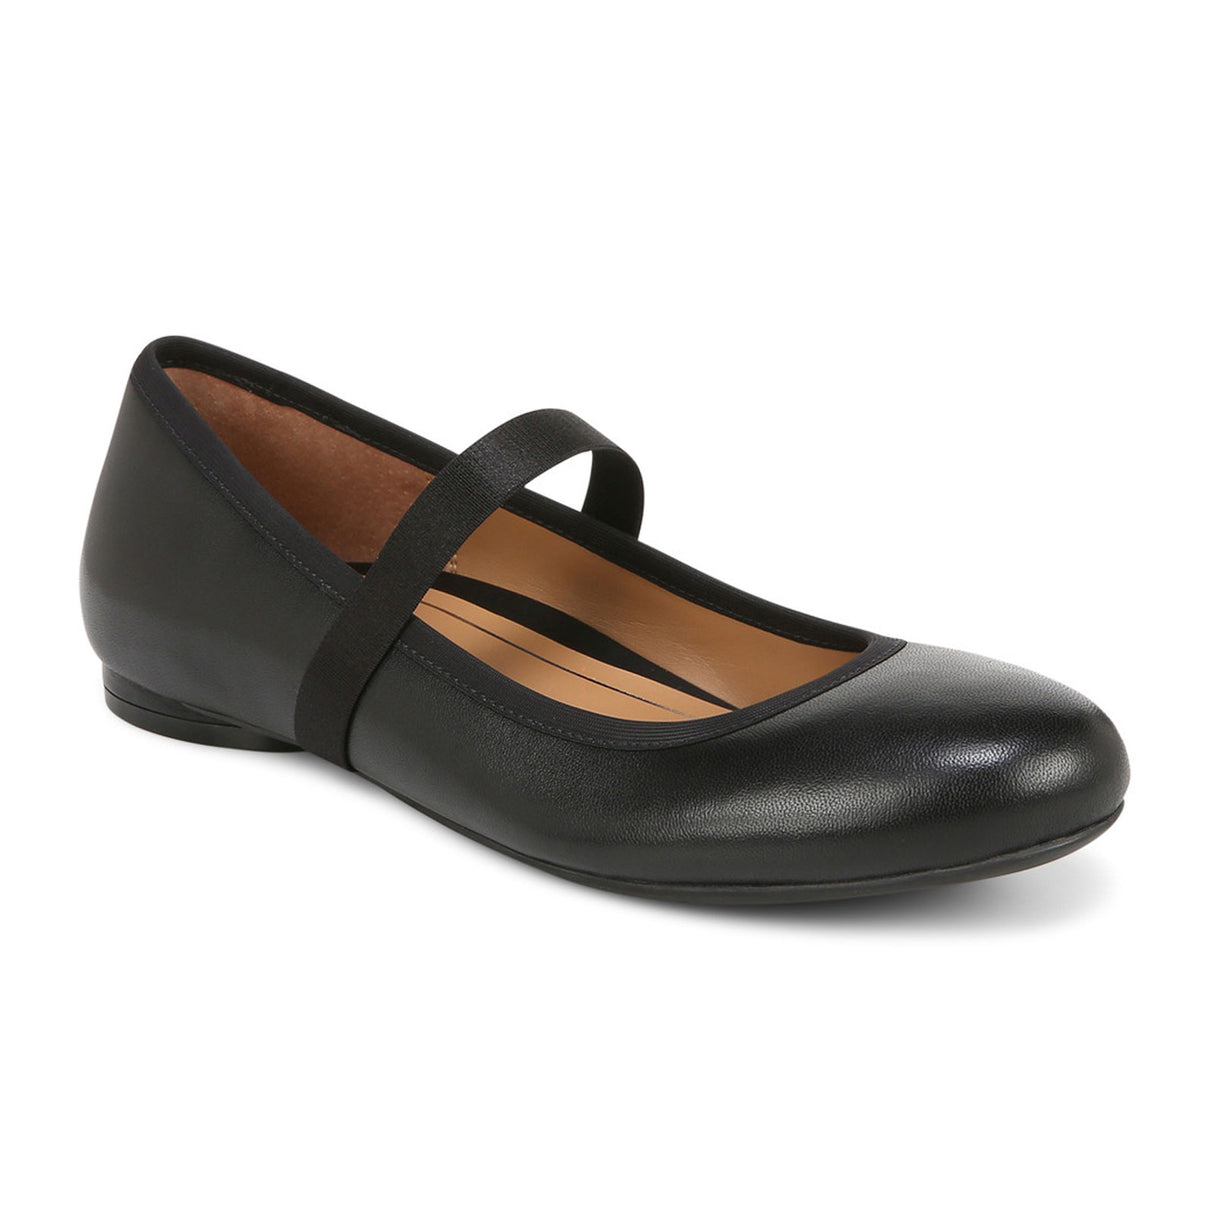 Vionic Joseline (Women) - Black Leather Dress-Casual - Mary Janes - The Heel Shoe Fitters